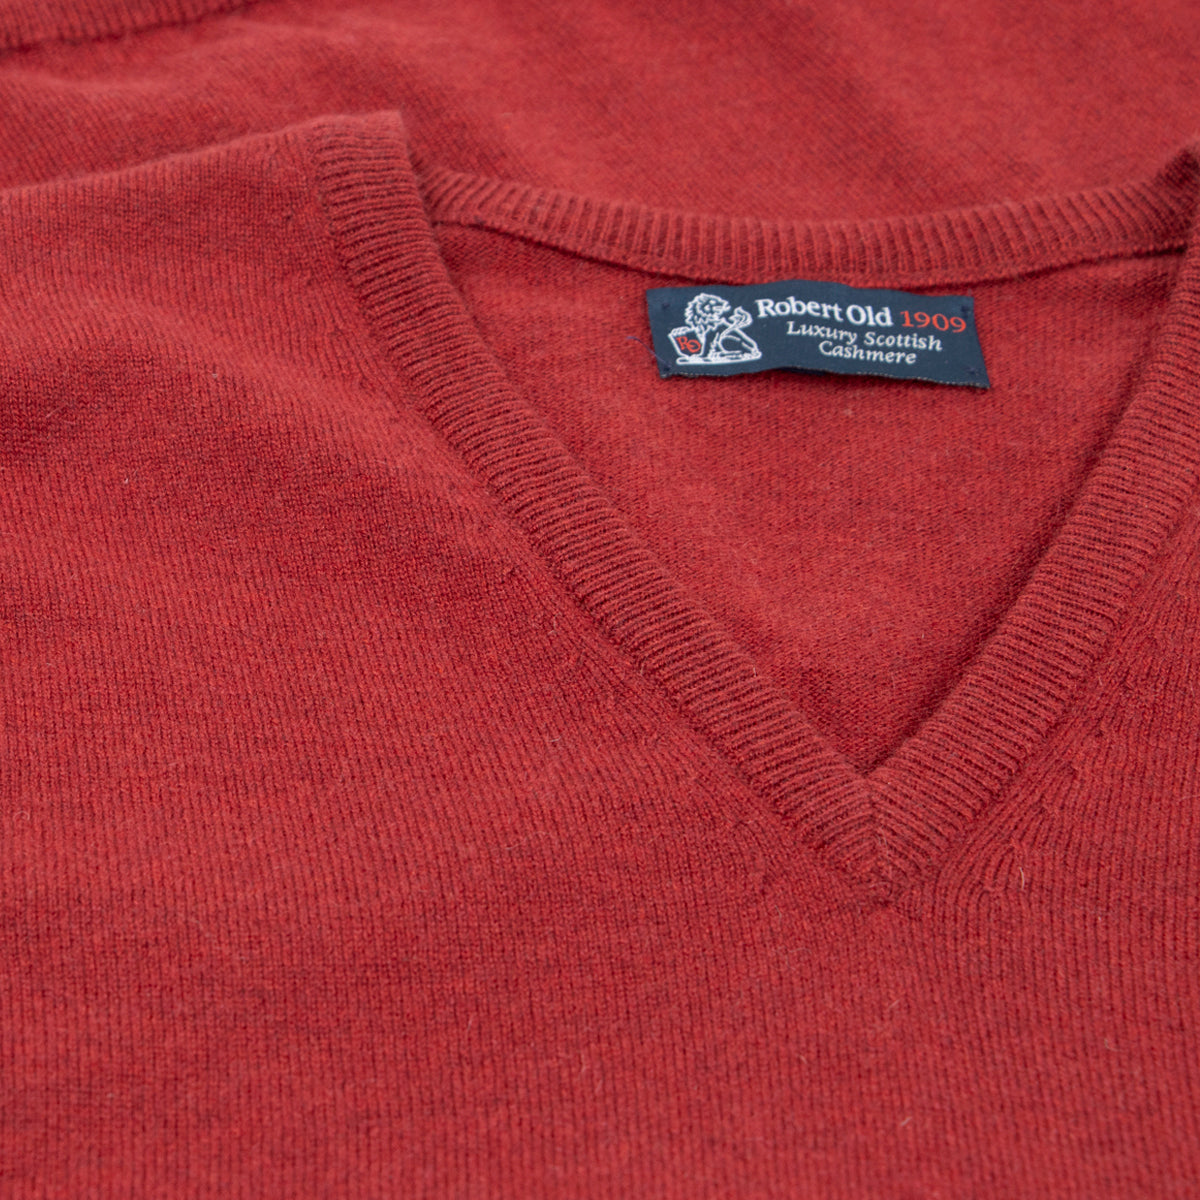 Russet Red Blenheim Cashmere Sleeveless V-Neck Sweater  Robert Old   